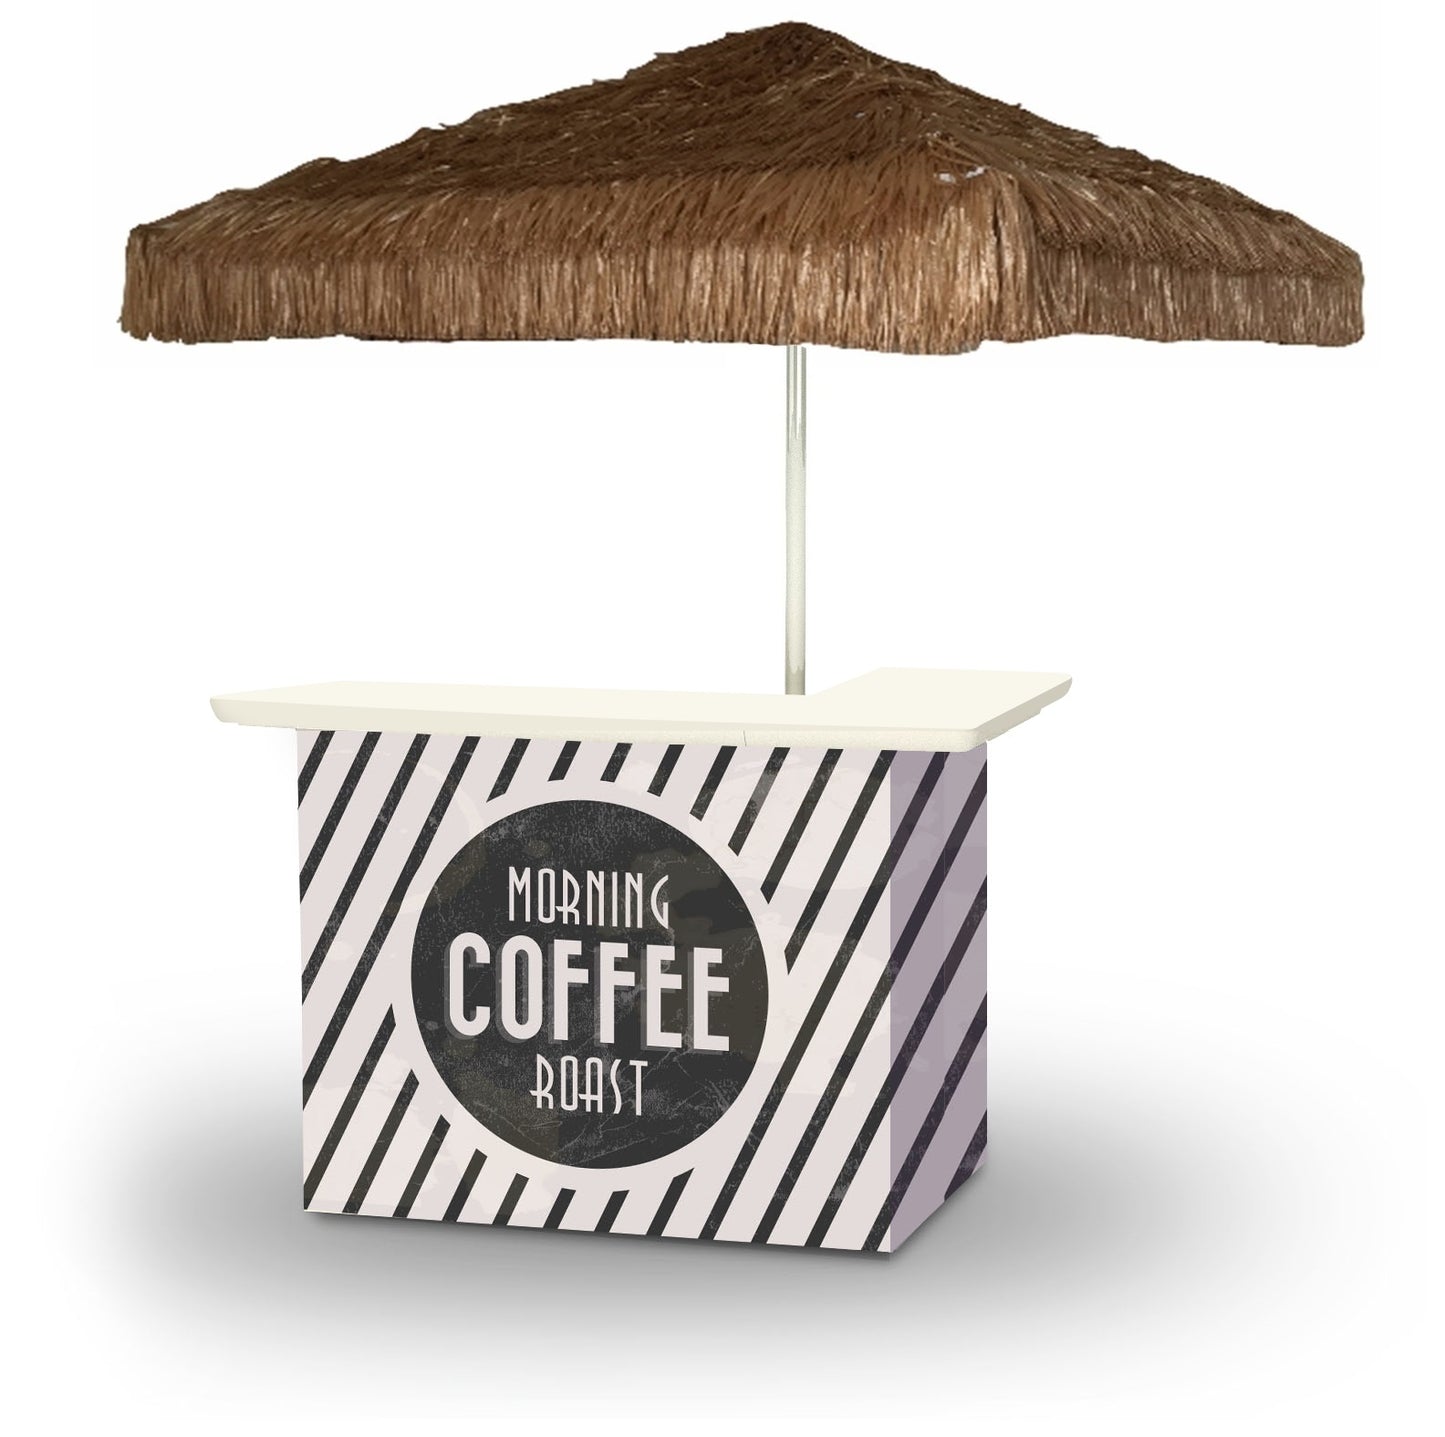 Morning Coffee Roast Portable Pop-Up Bar